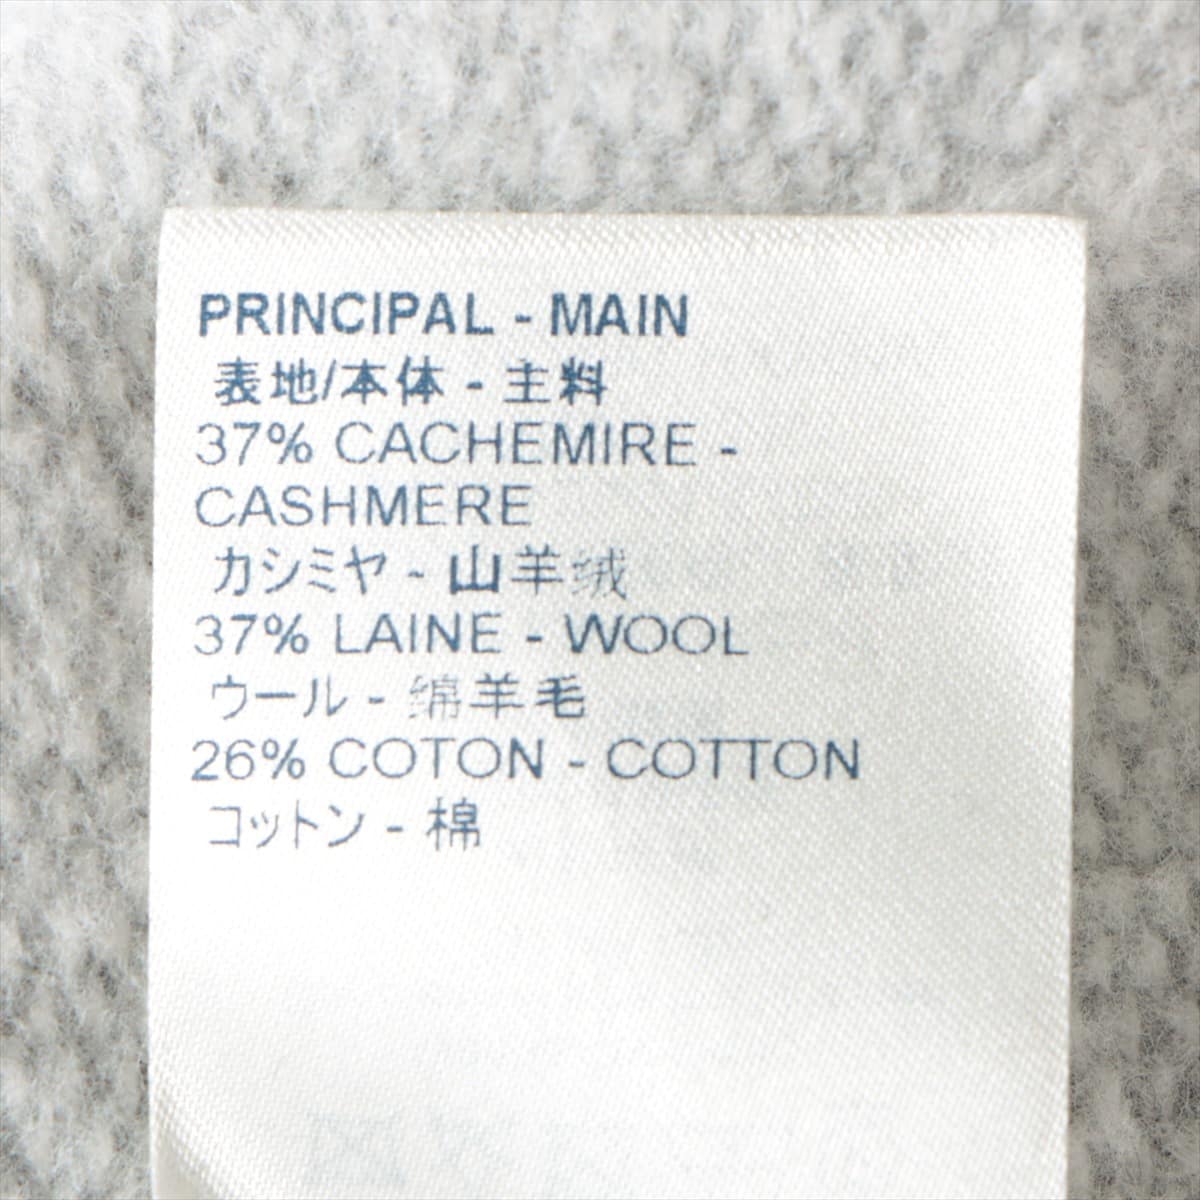 Louis Vuitton x NBA RM211M Wool & cashmere Sweatpants L Men's Grey